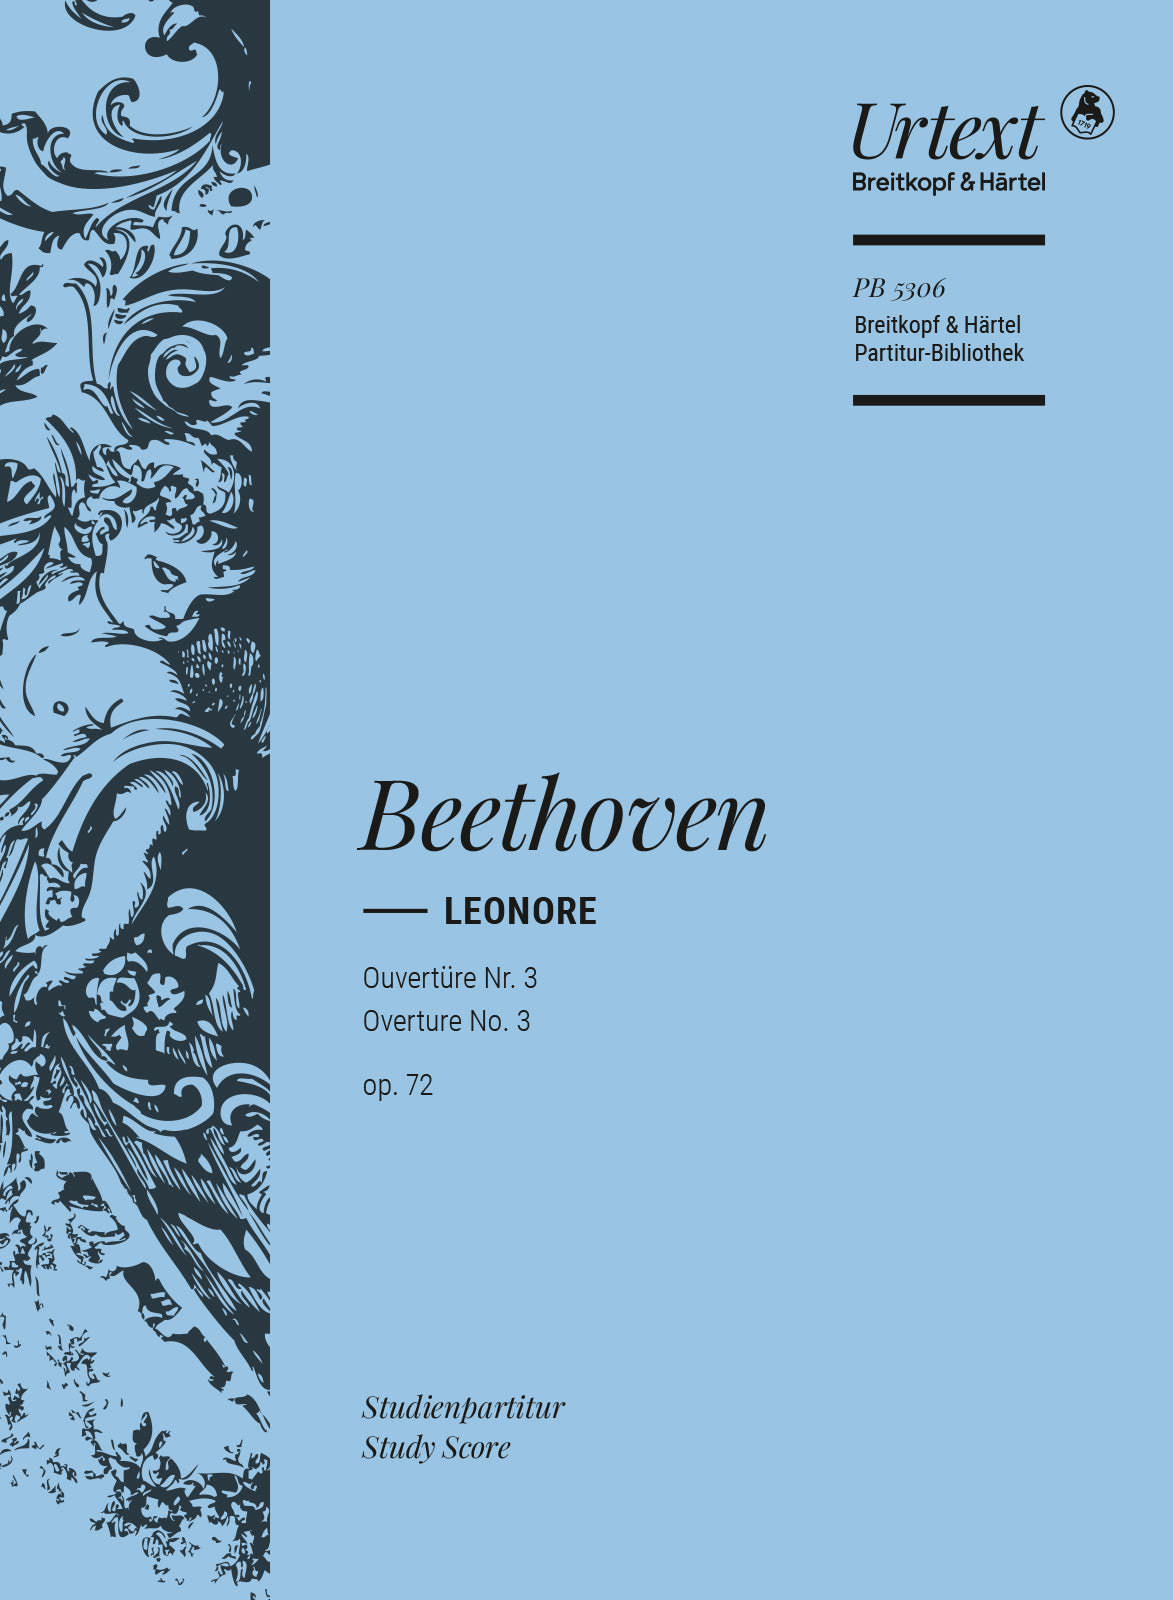 Beethoven Leonore Overture 3, Op. 72 - Study Score